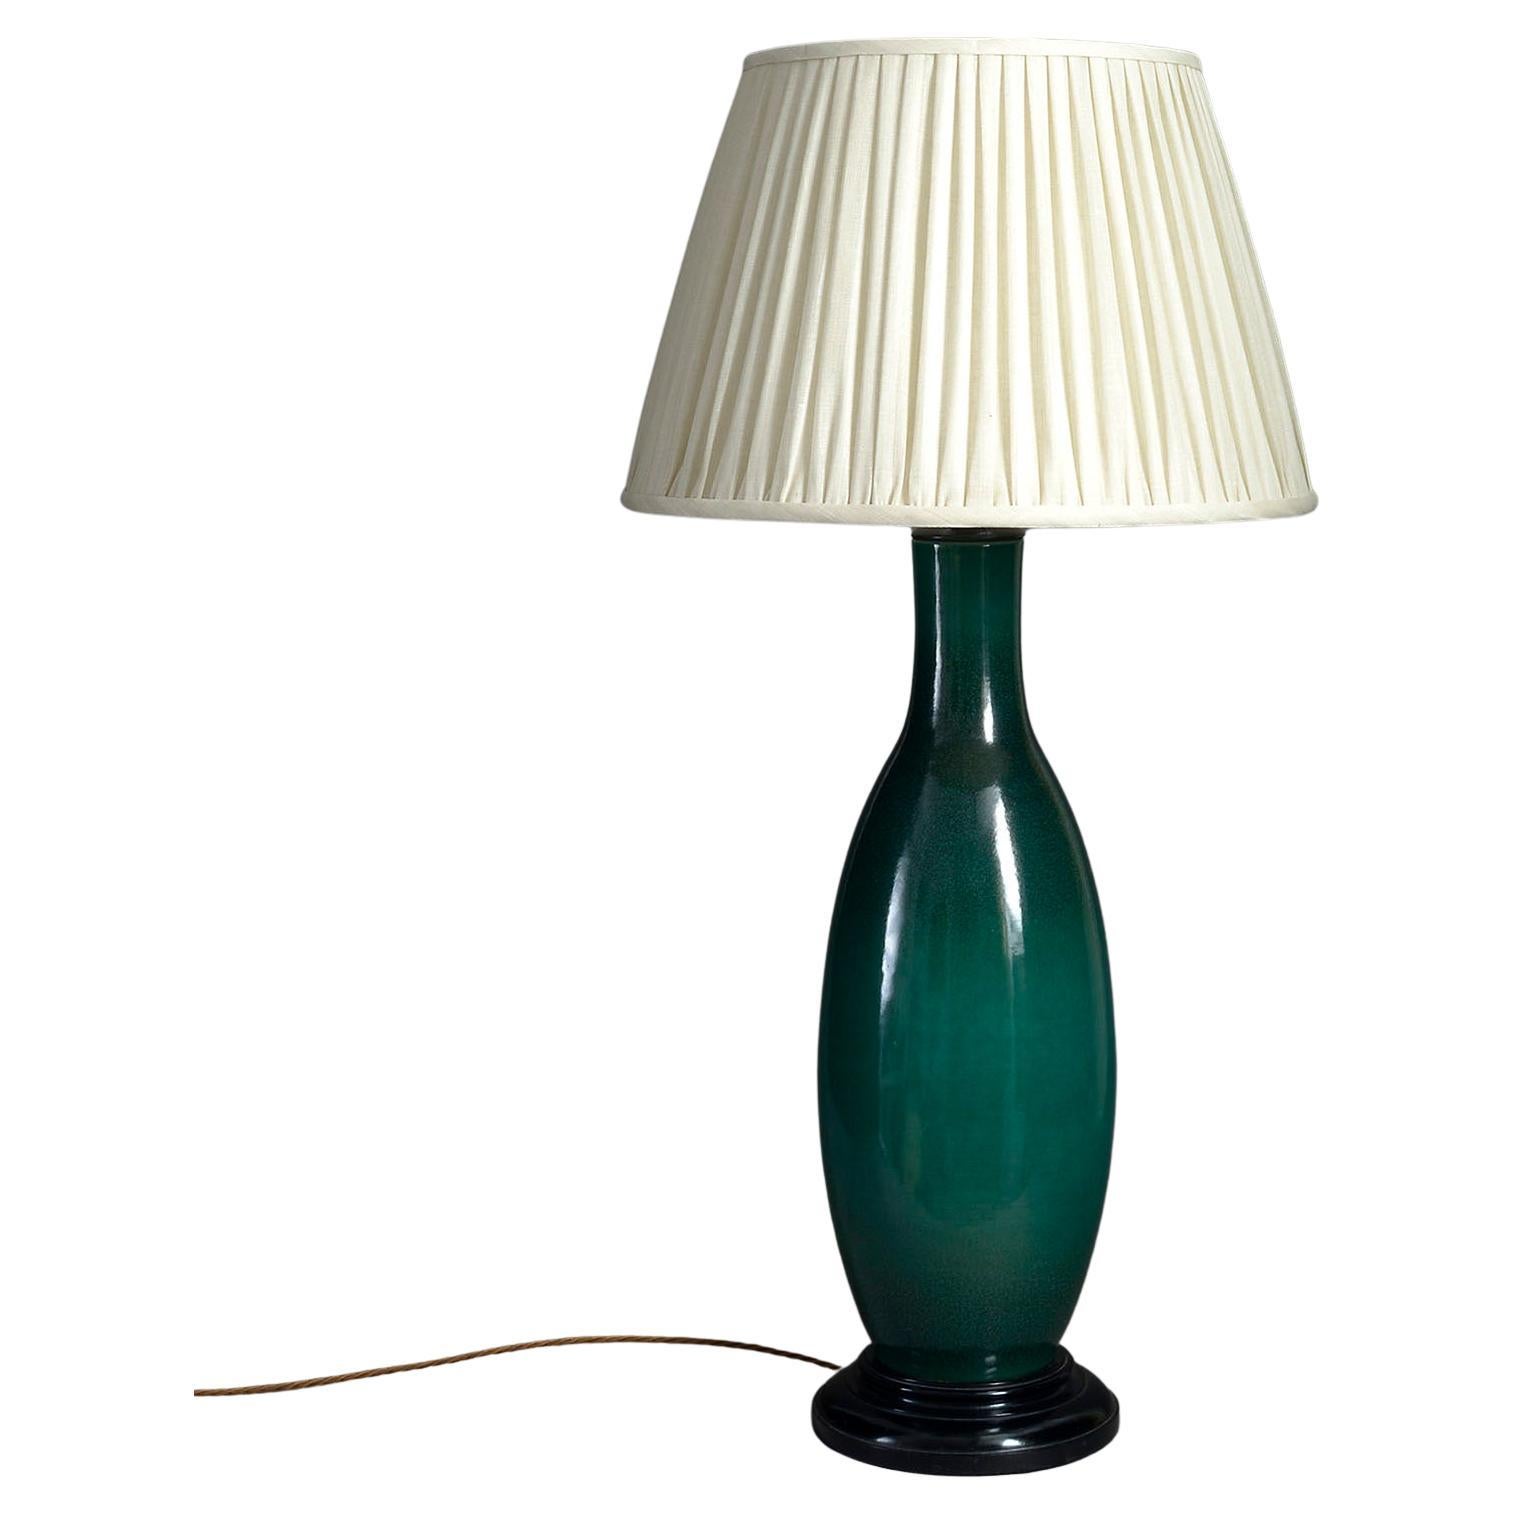 Tall 20th Century Green Glazed Ceramic Vase Lamp